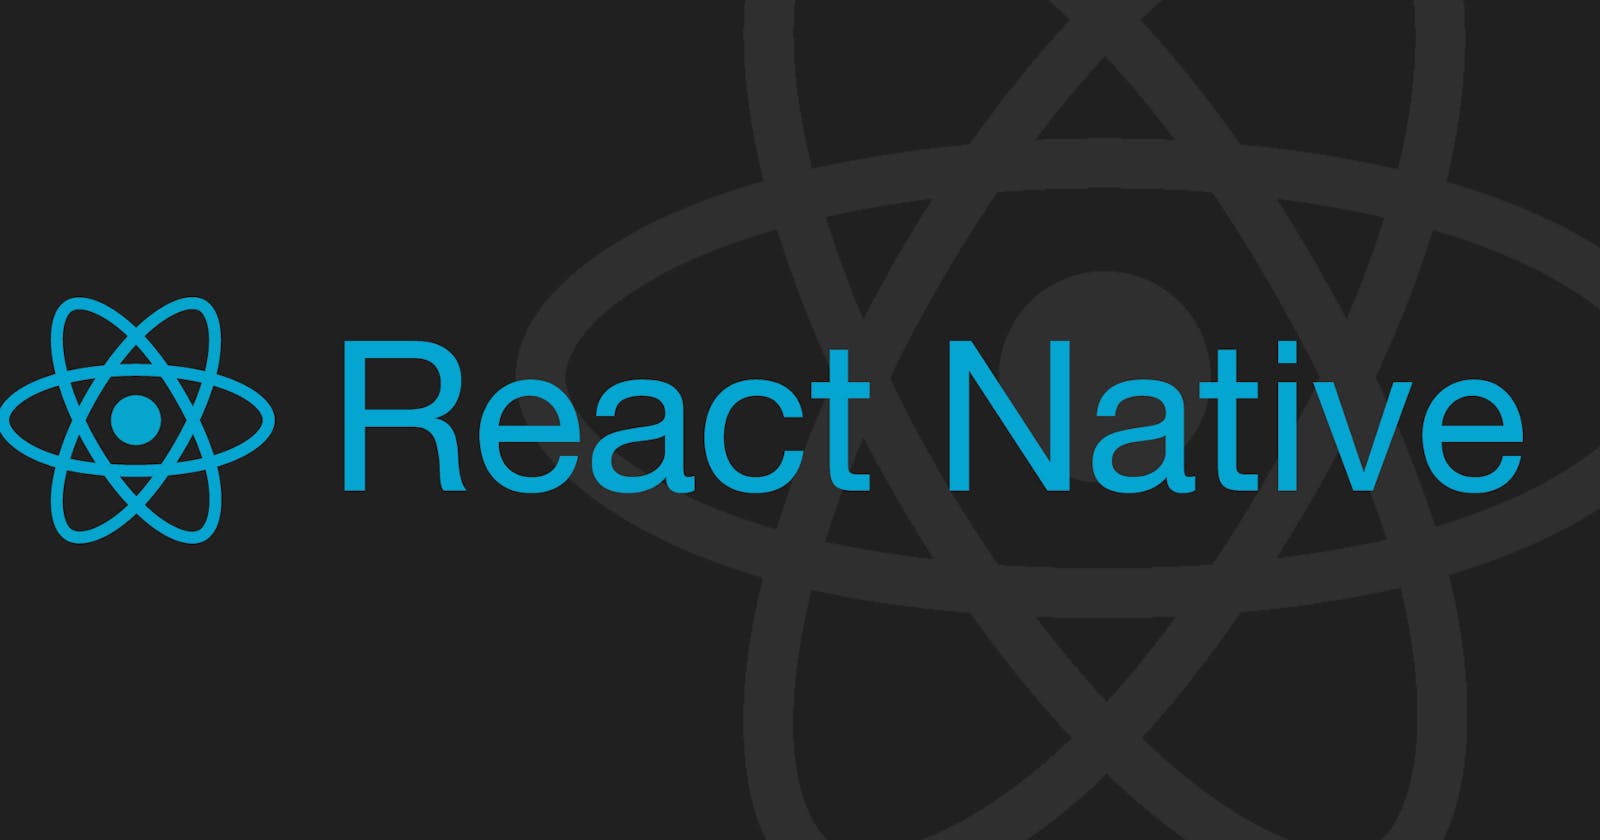 First React Native App